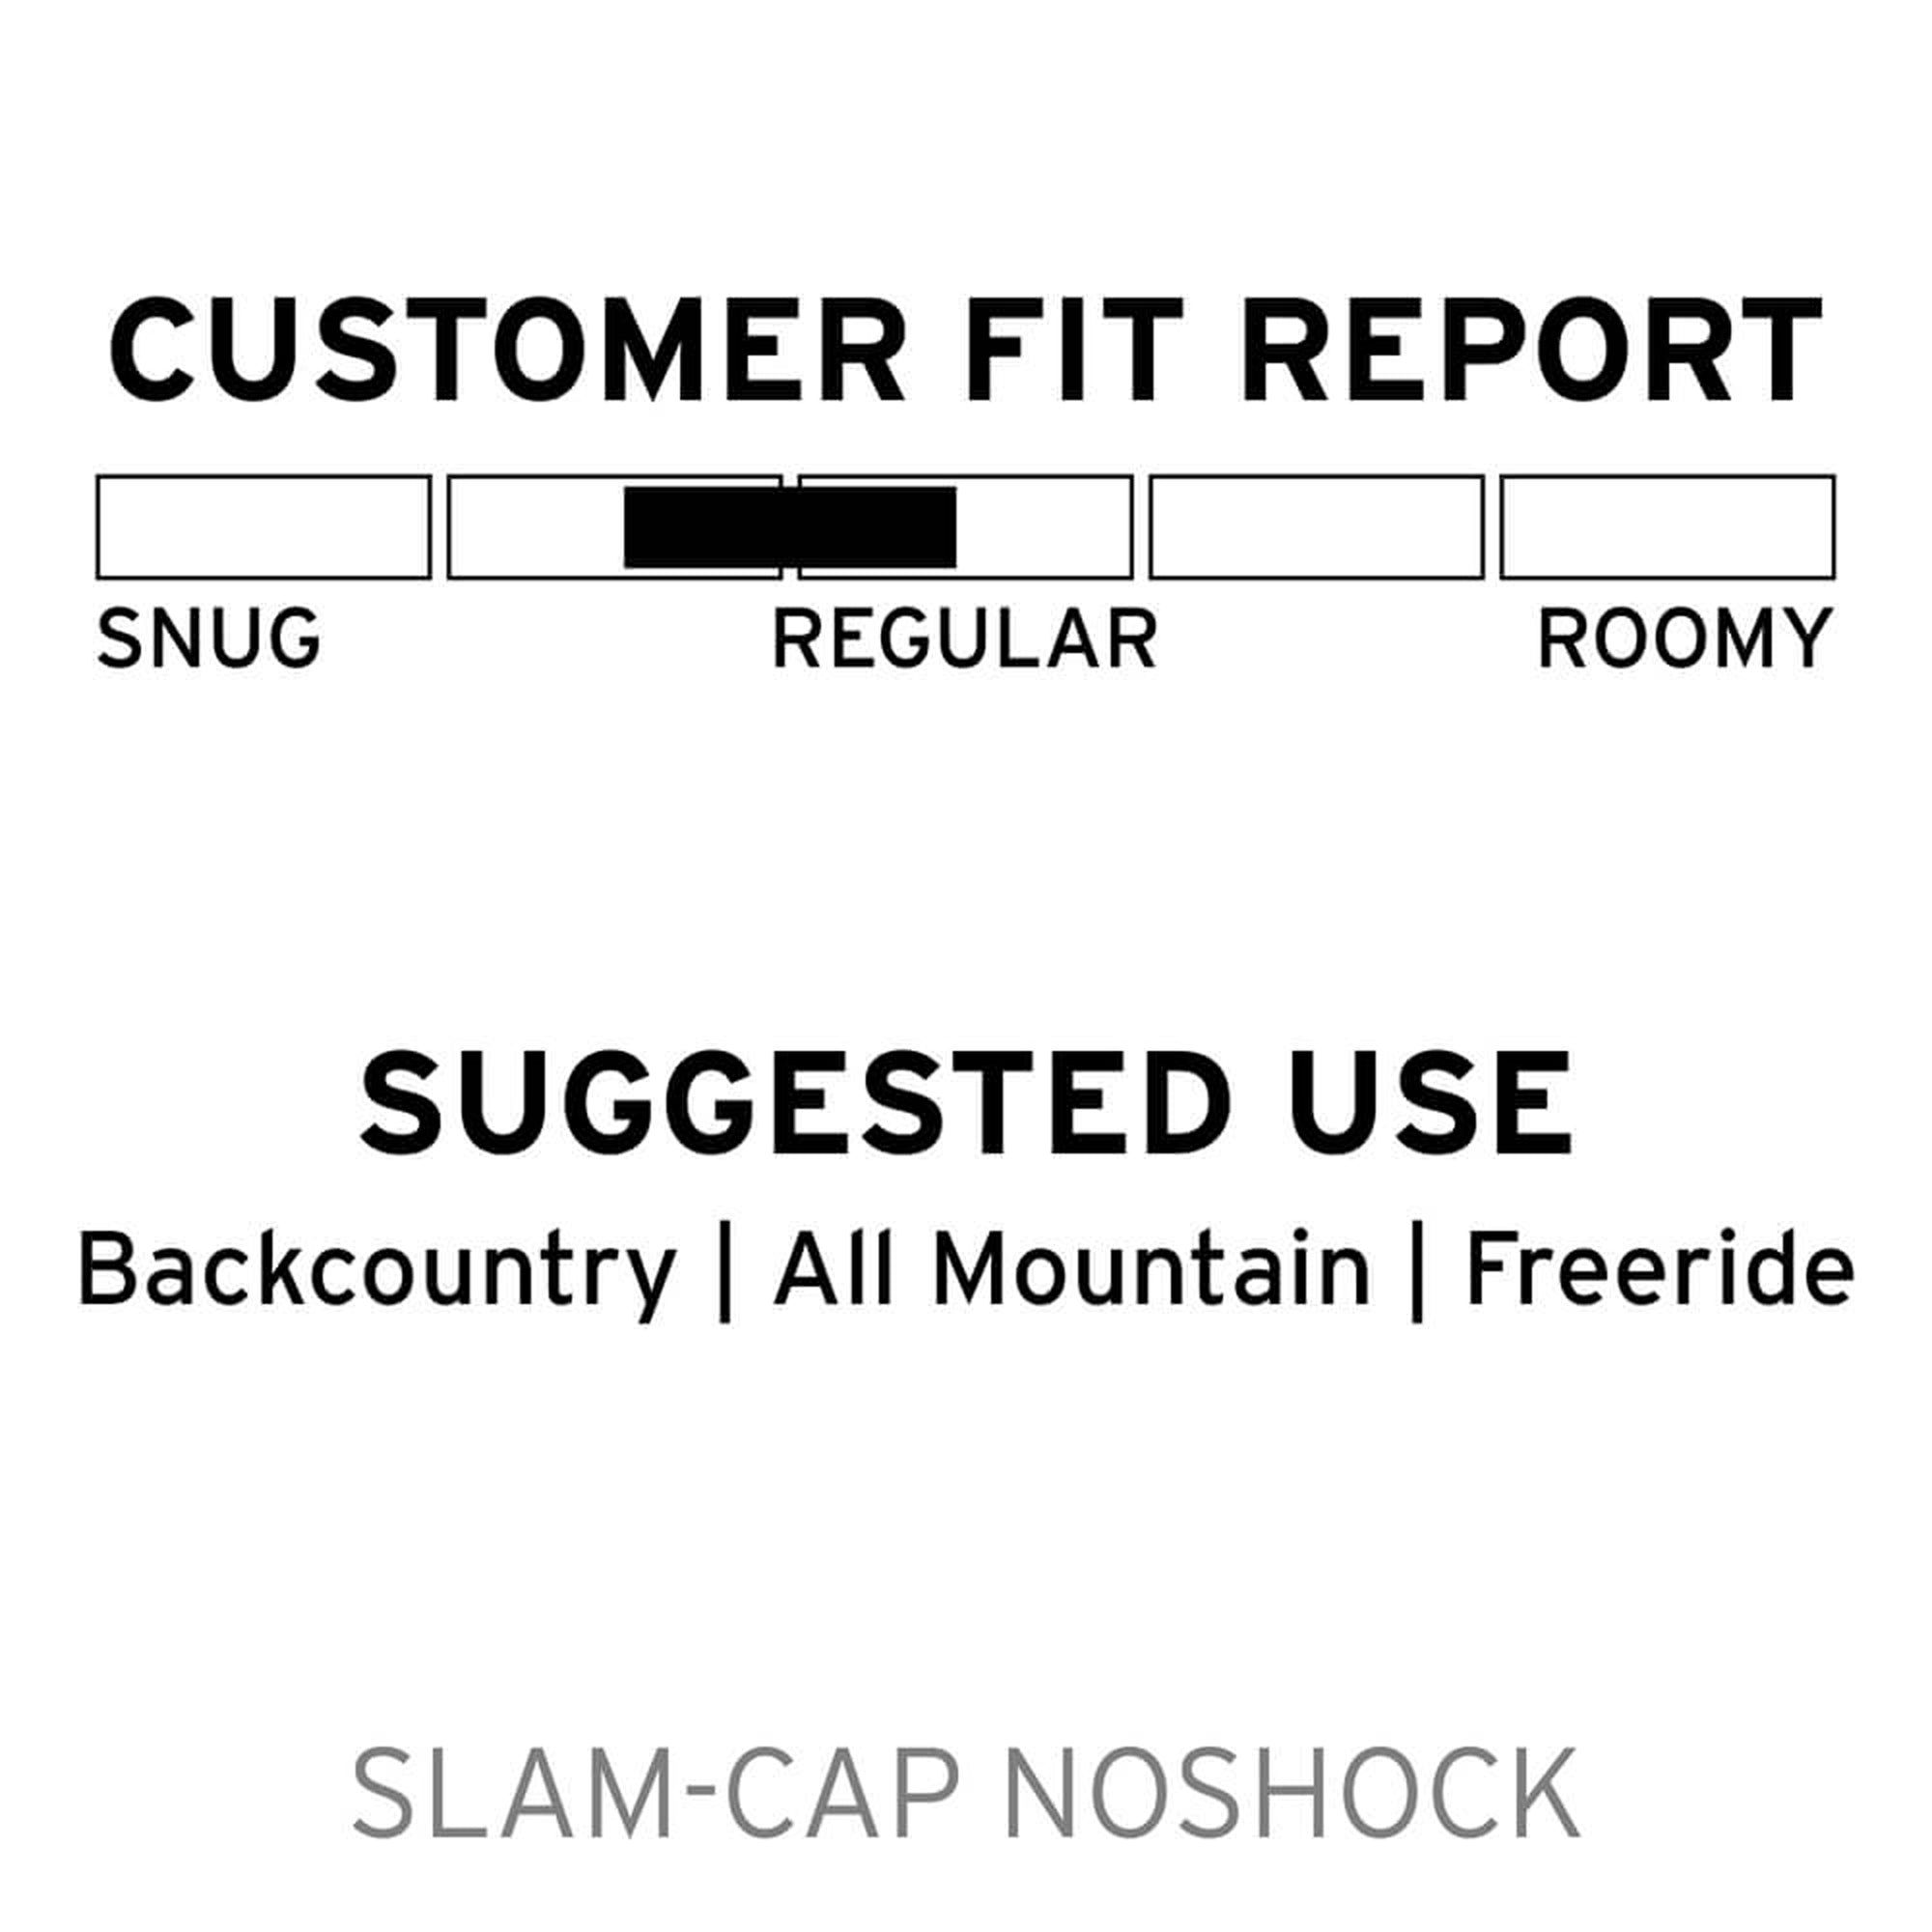 SHRED SLAM-CAP NOSHOCK 2.0 - GREY